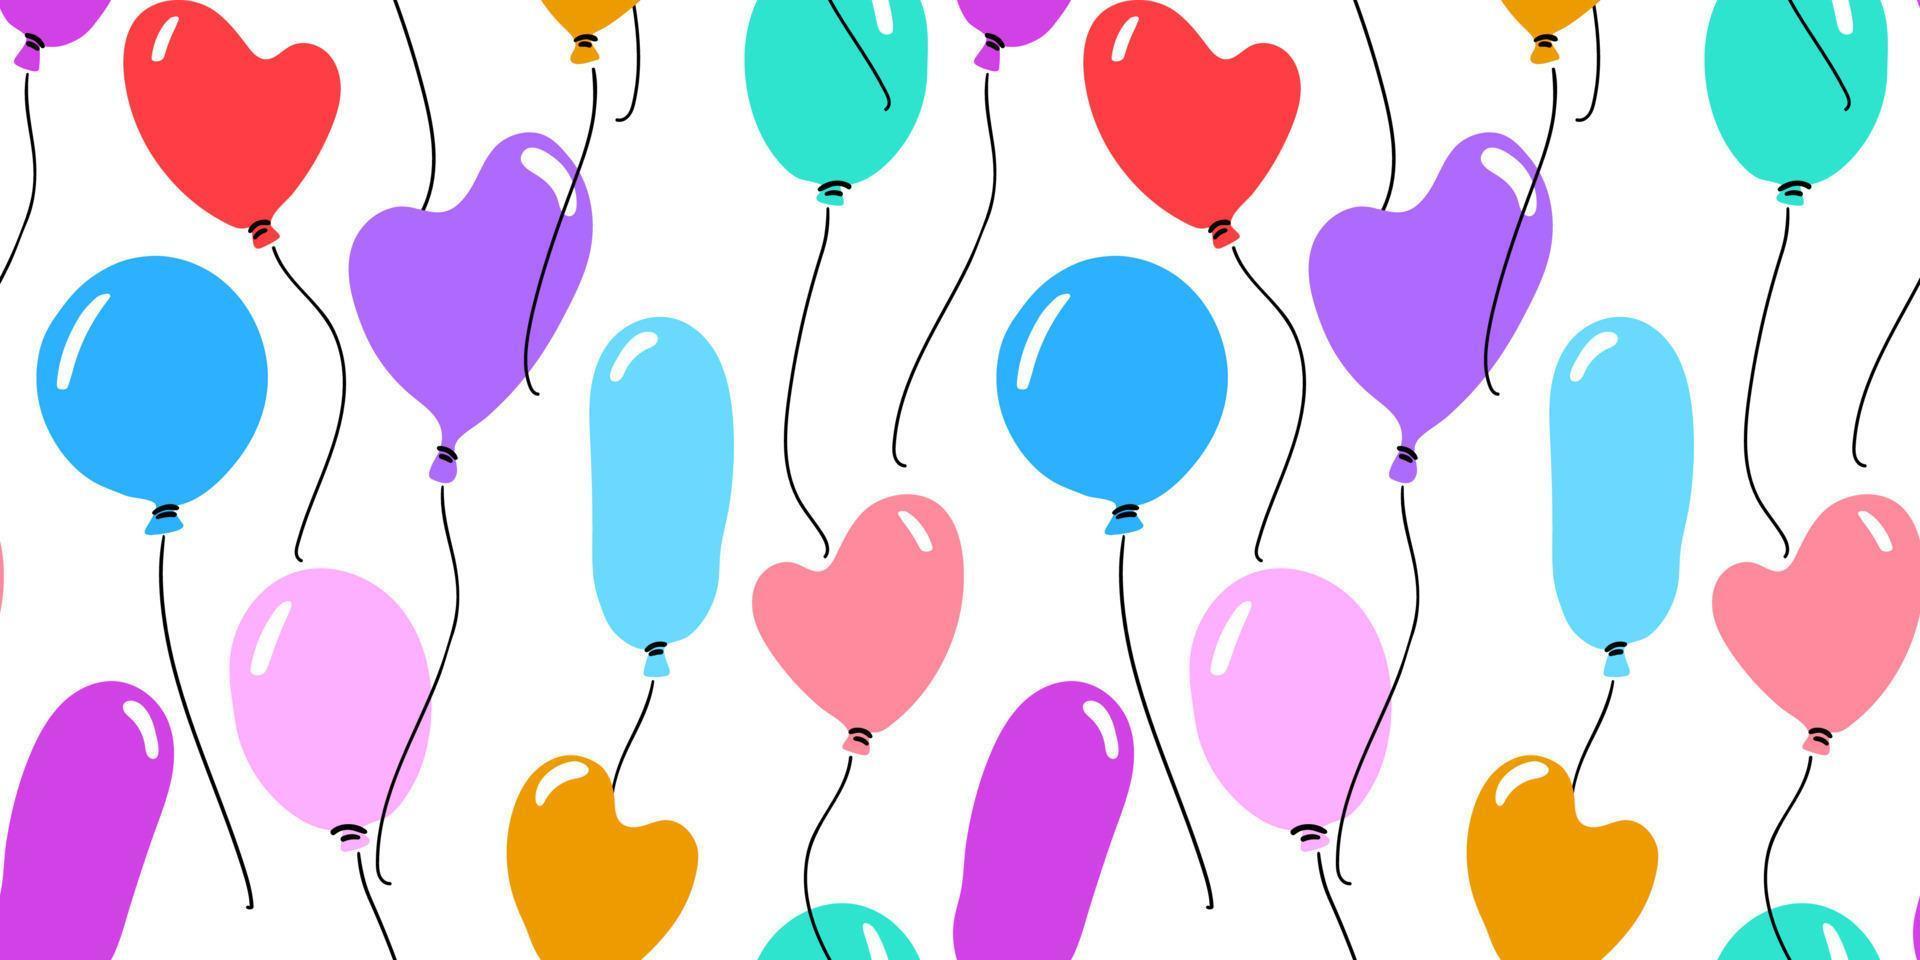 Cartoon balloons seamless pattern. Vector hand drawn illustration. Heart shape flying baloons background.